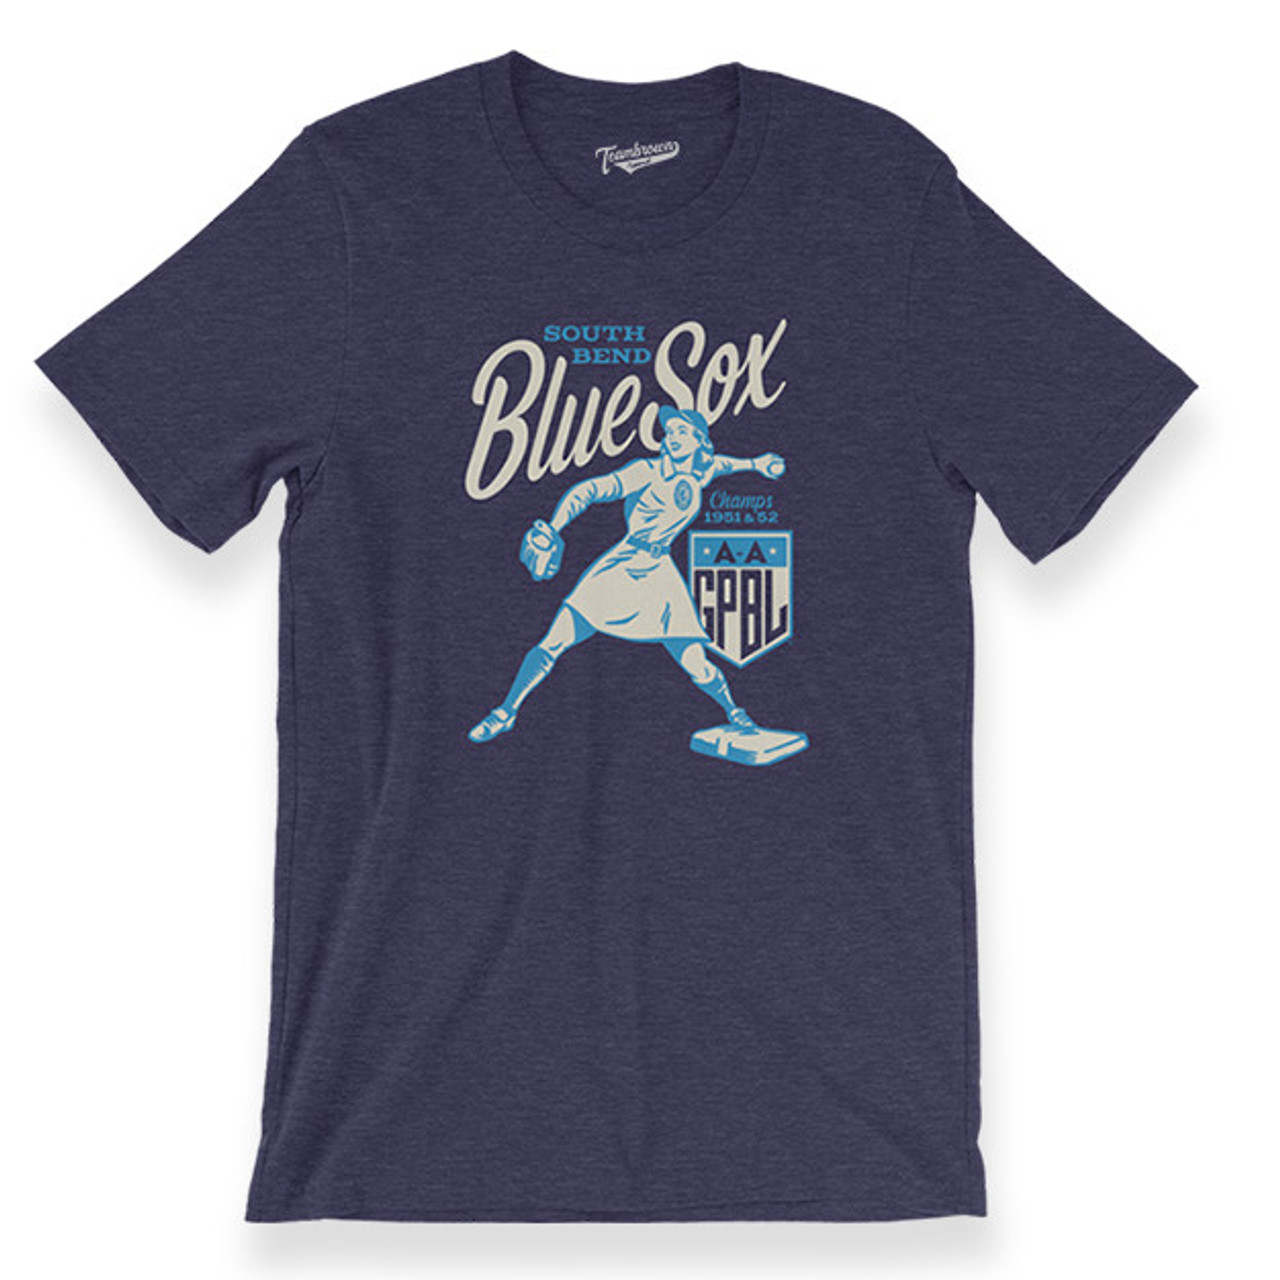 Rock'n U Designs Custom Unisex T-Shirt Red Sox - Baseball Leopard Design Small / Royal Blue